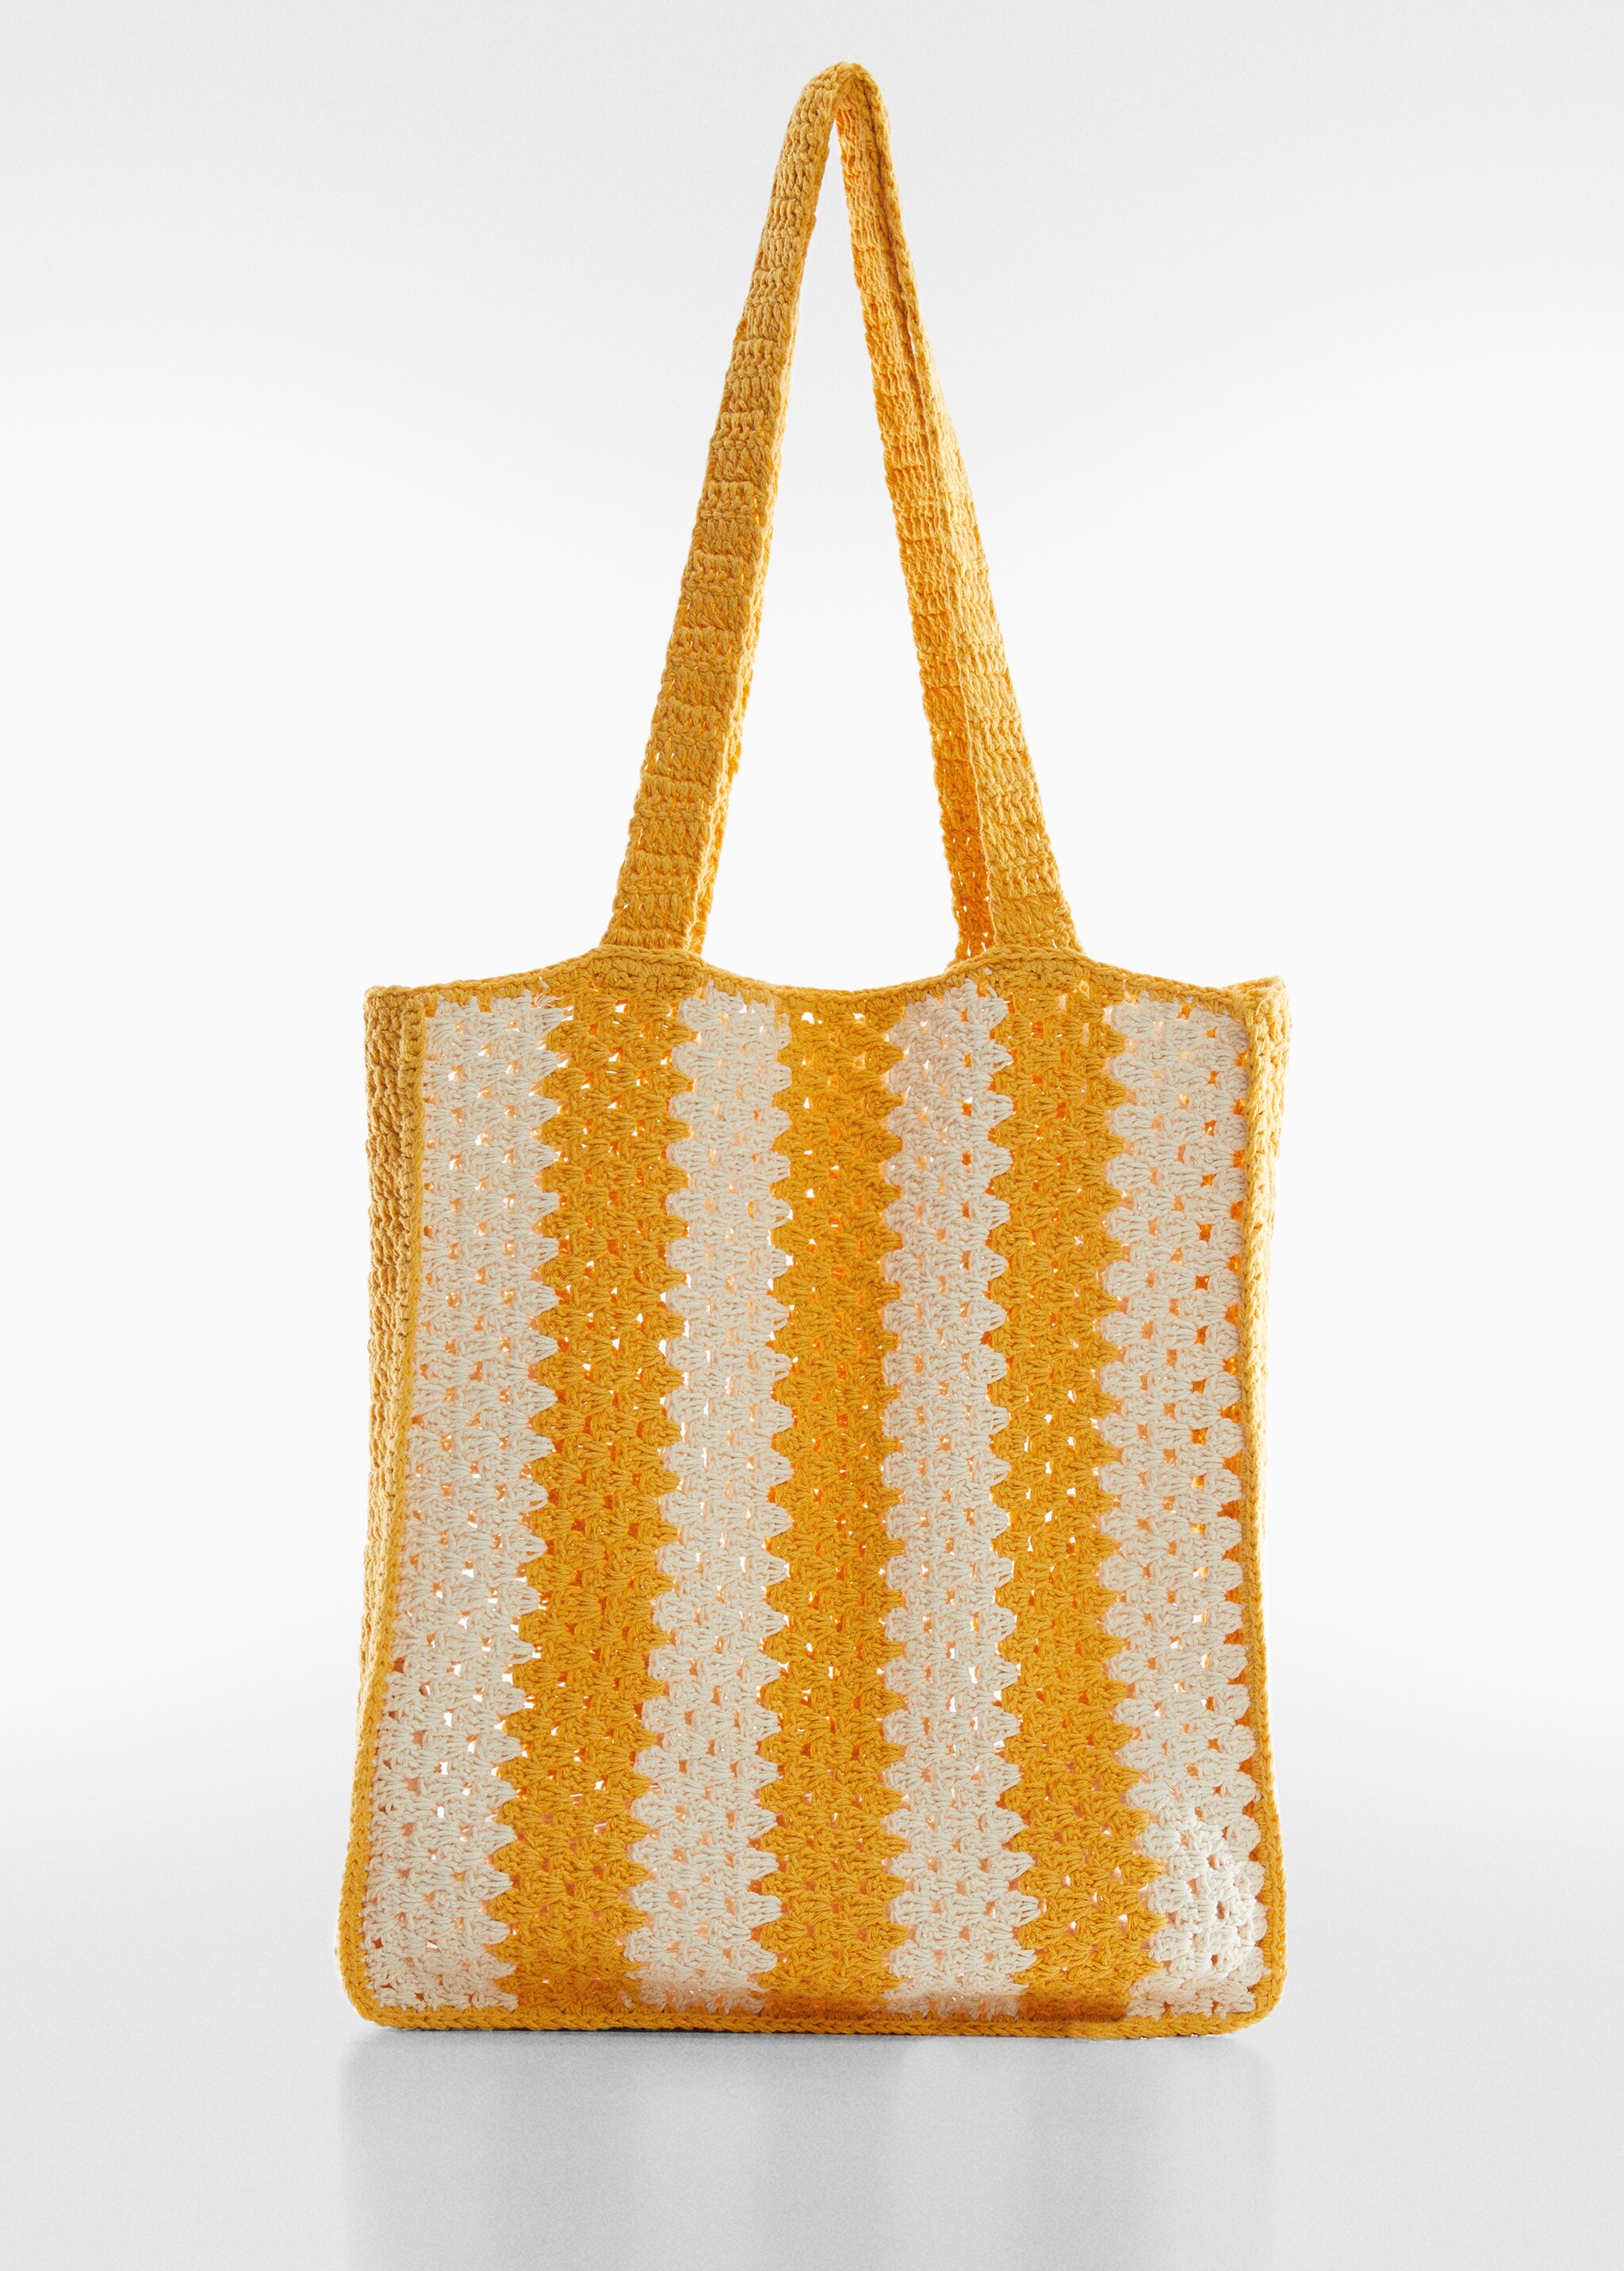 Bucket crochet bag - Article without model